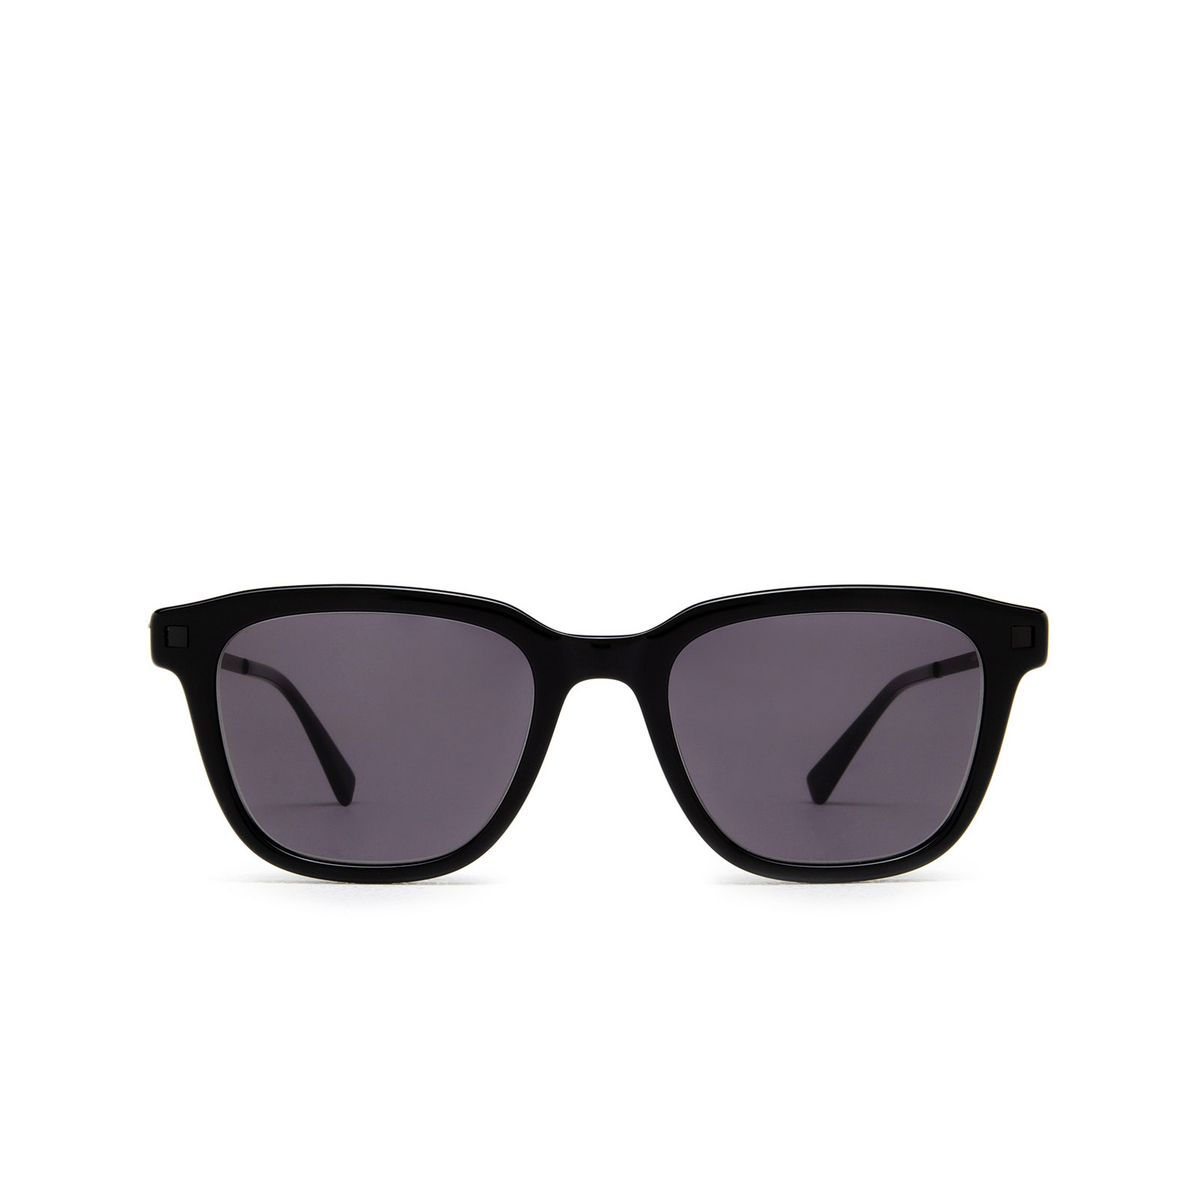 Mykita HOLM Sunglasses 915 C2 Black/Black - front view